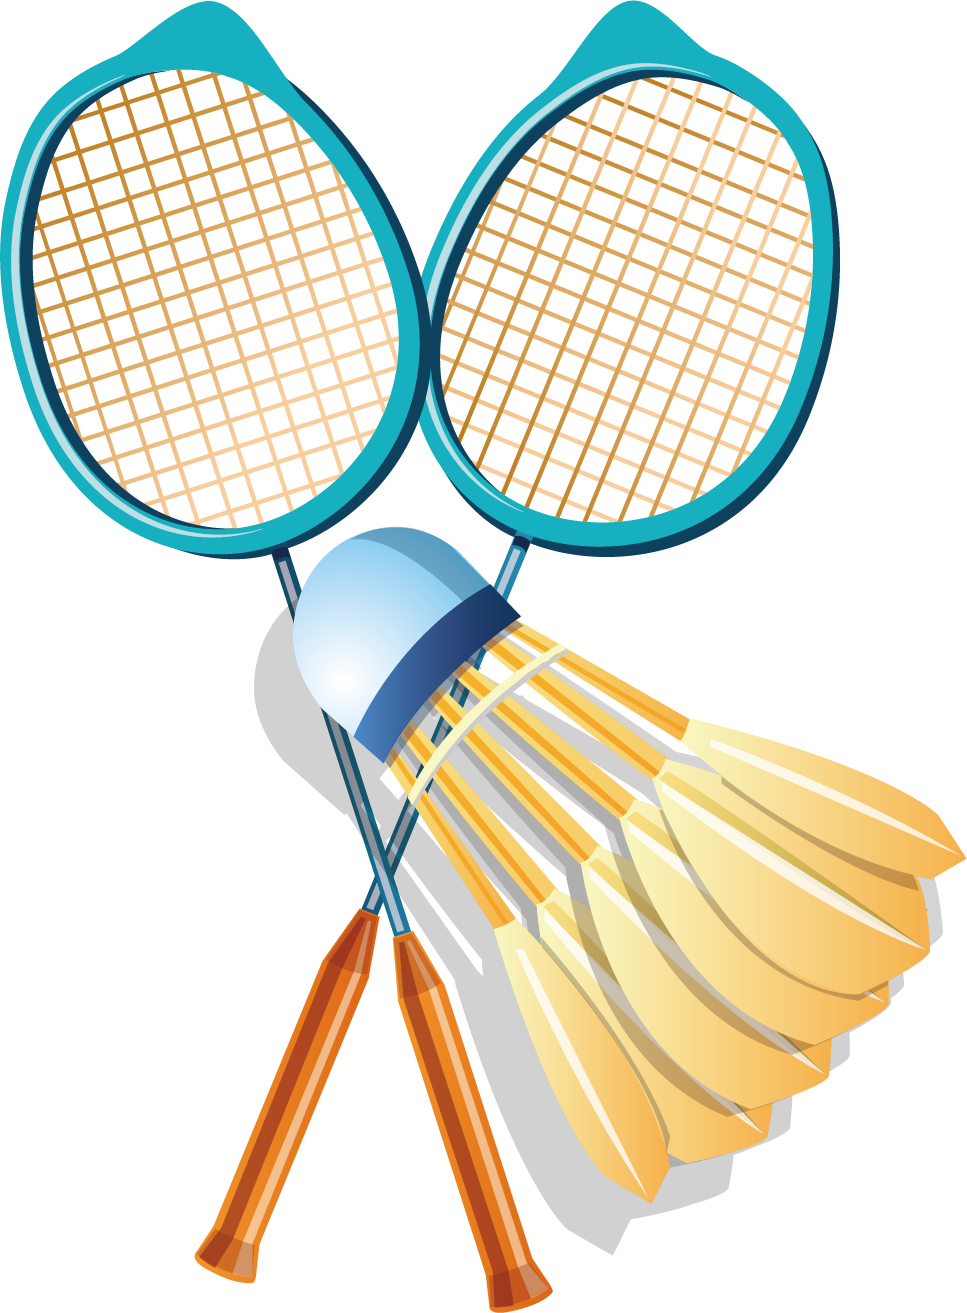 Badminton clipart badminton tournament, Badminton badminton tournament